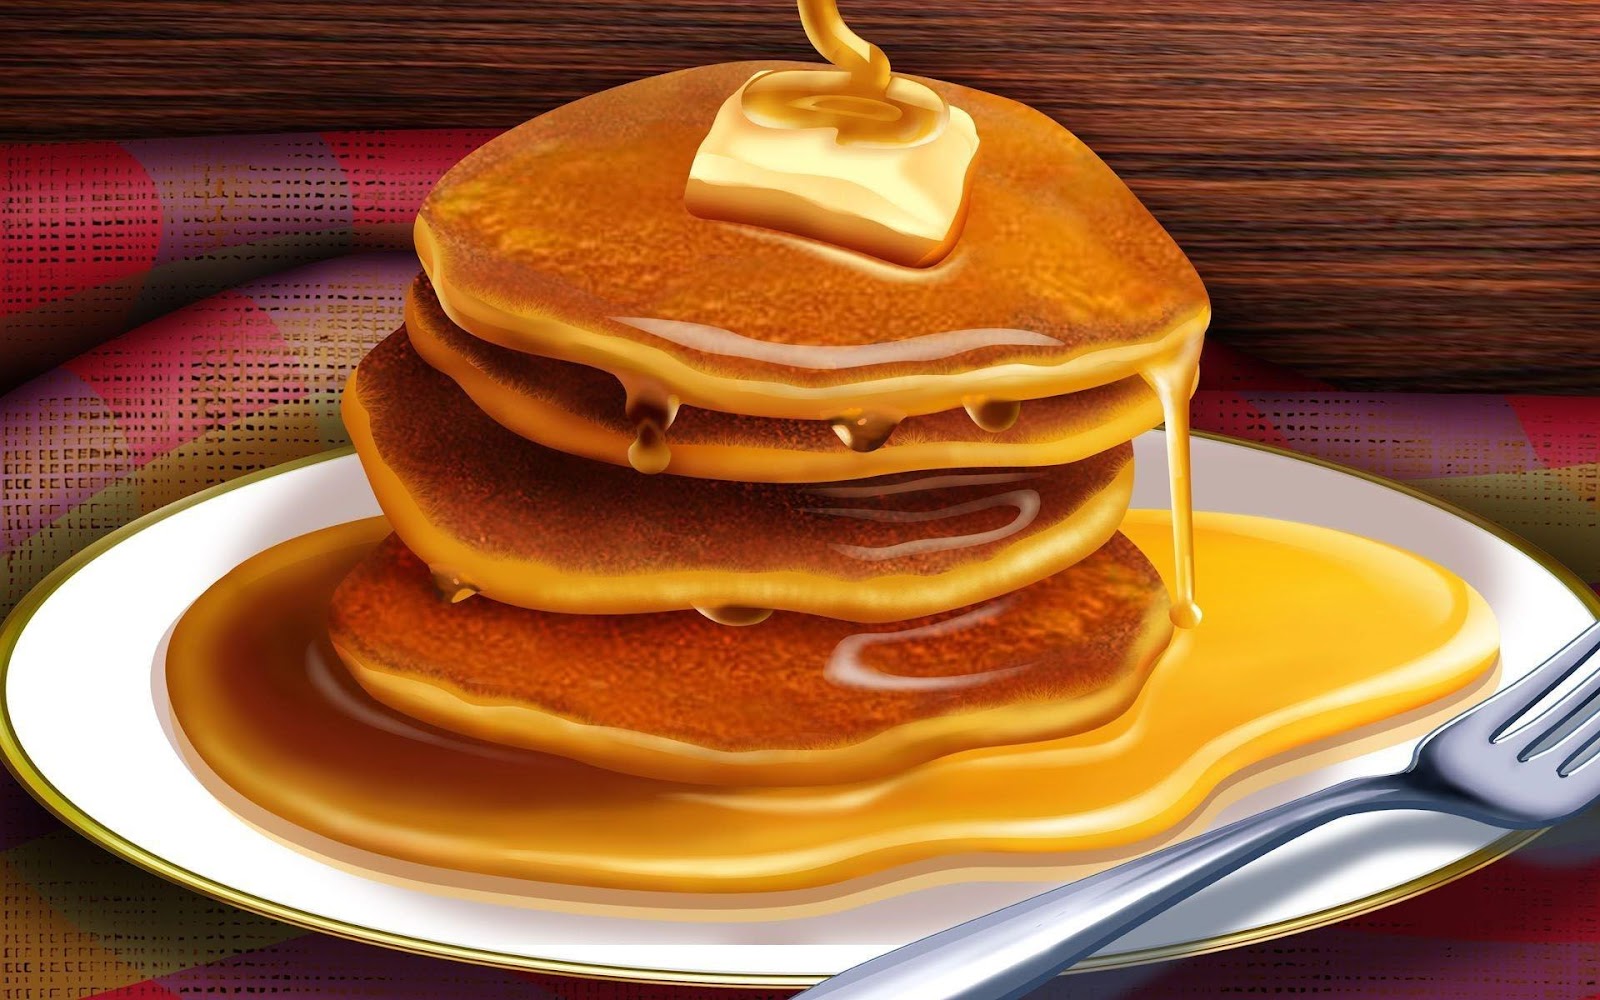 C:\Users\rwil313\Desktop\Pancakes and maple syrup (updated).jpg